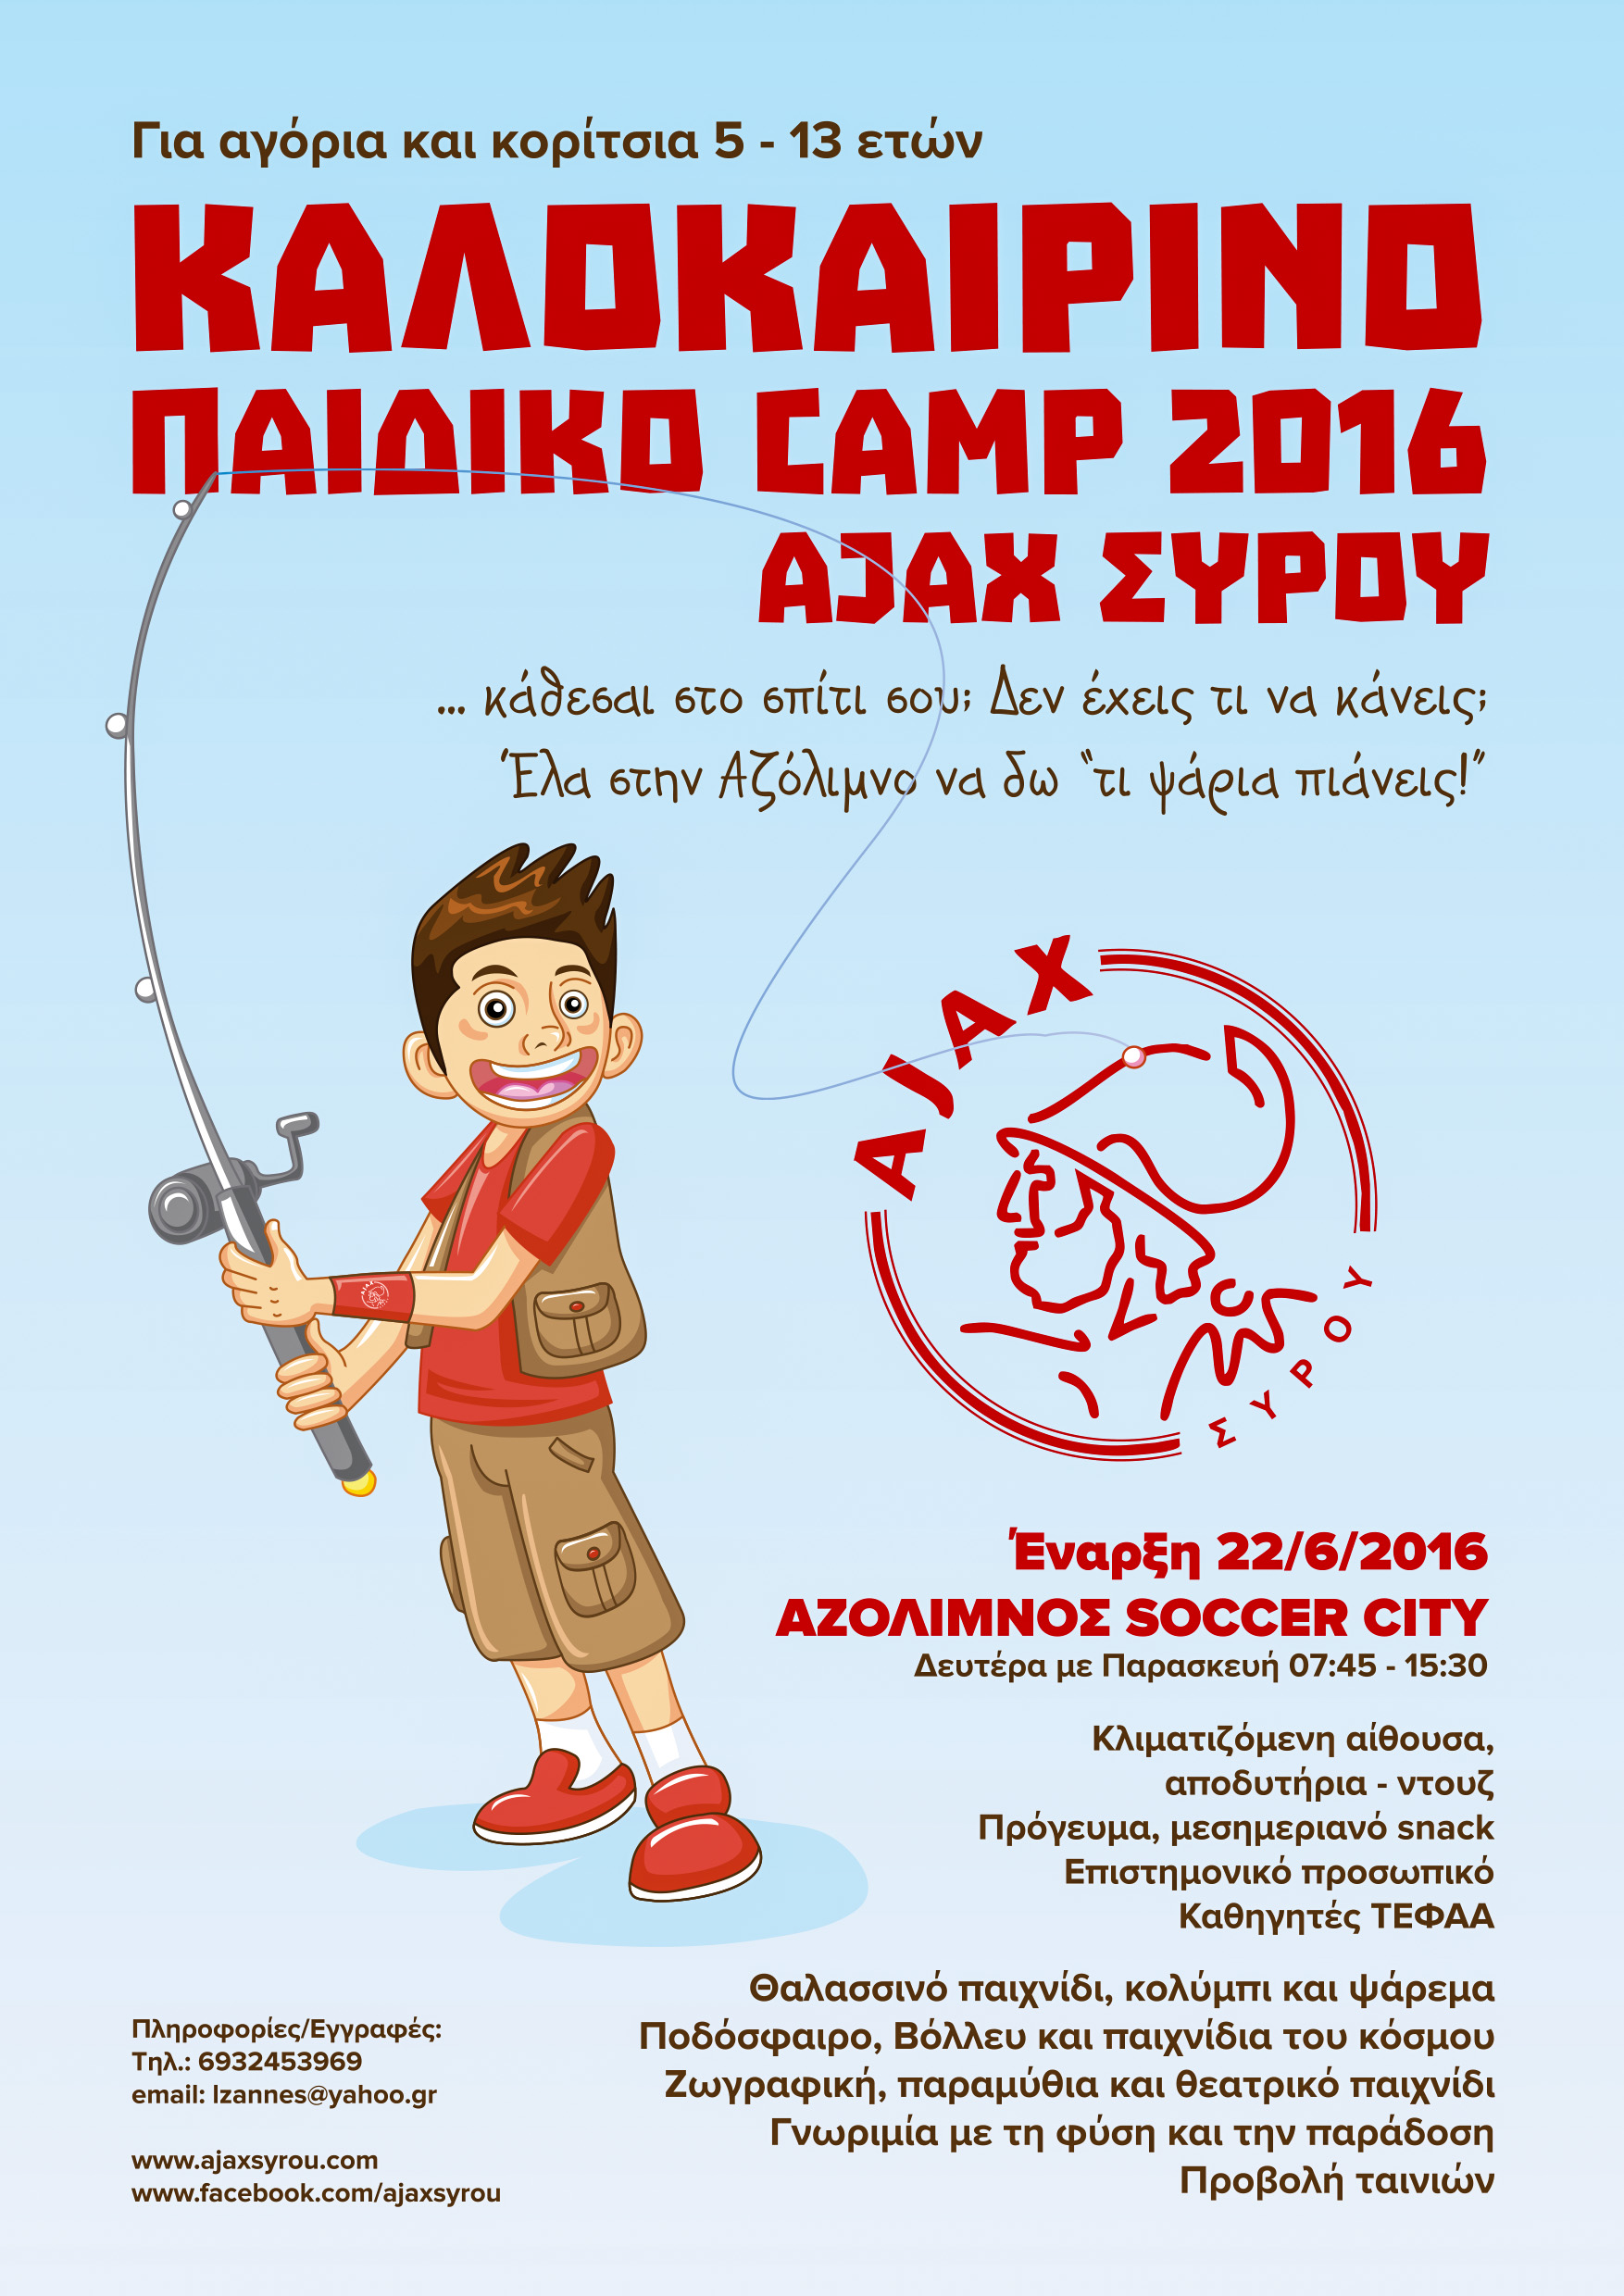 AJax Camp